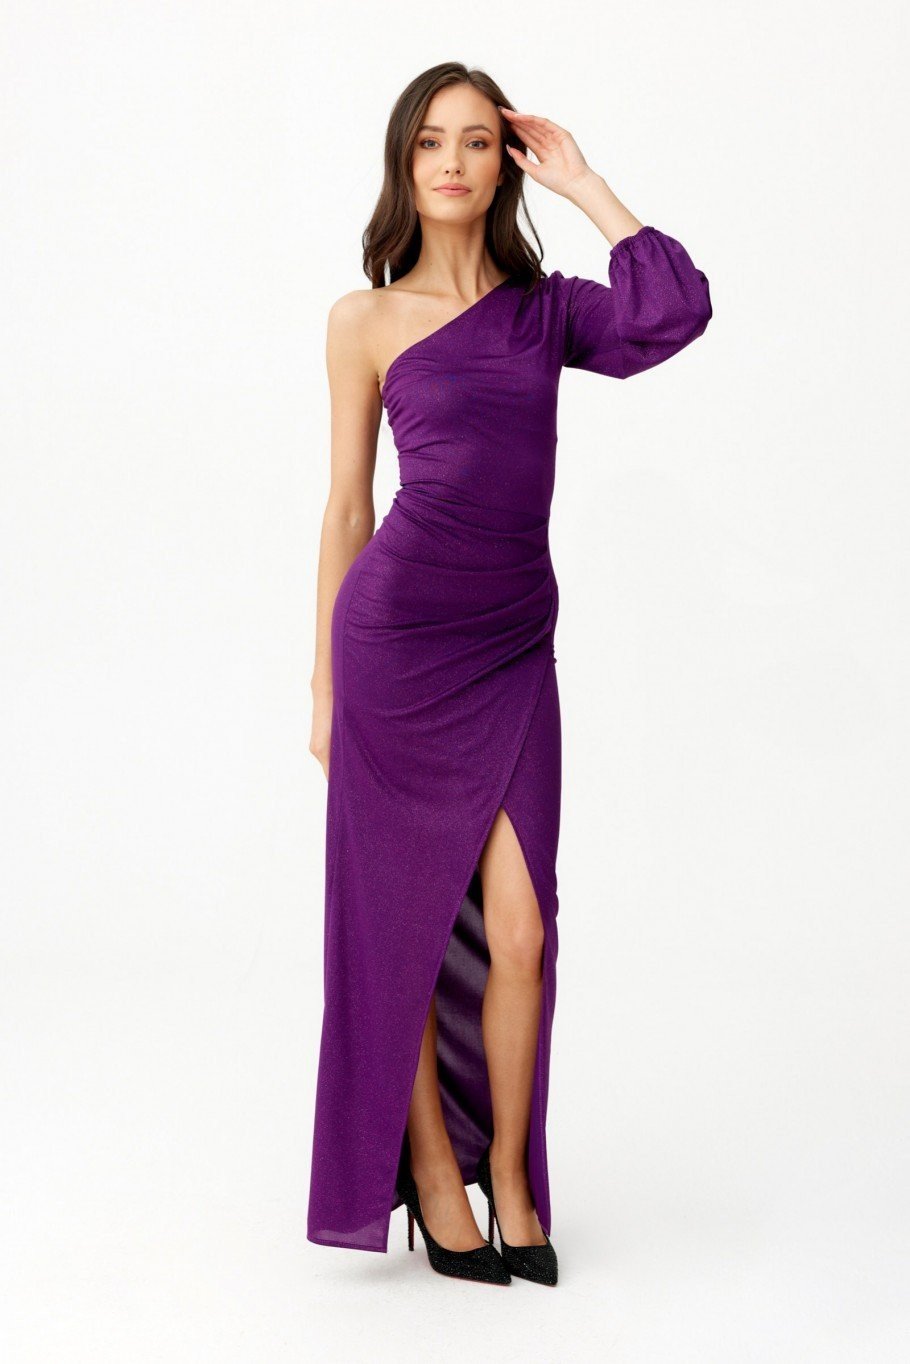 Roco Woman's Dress SUK0426